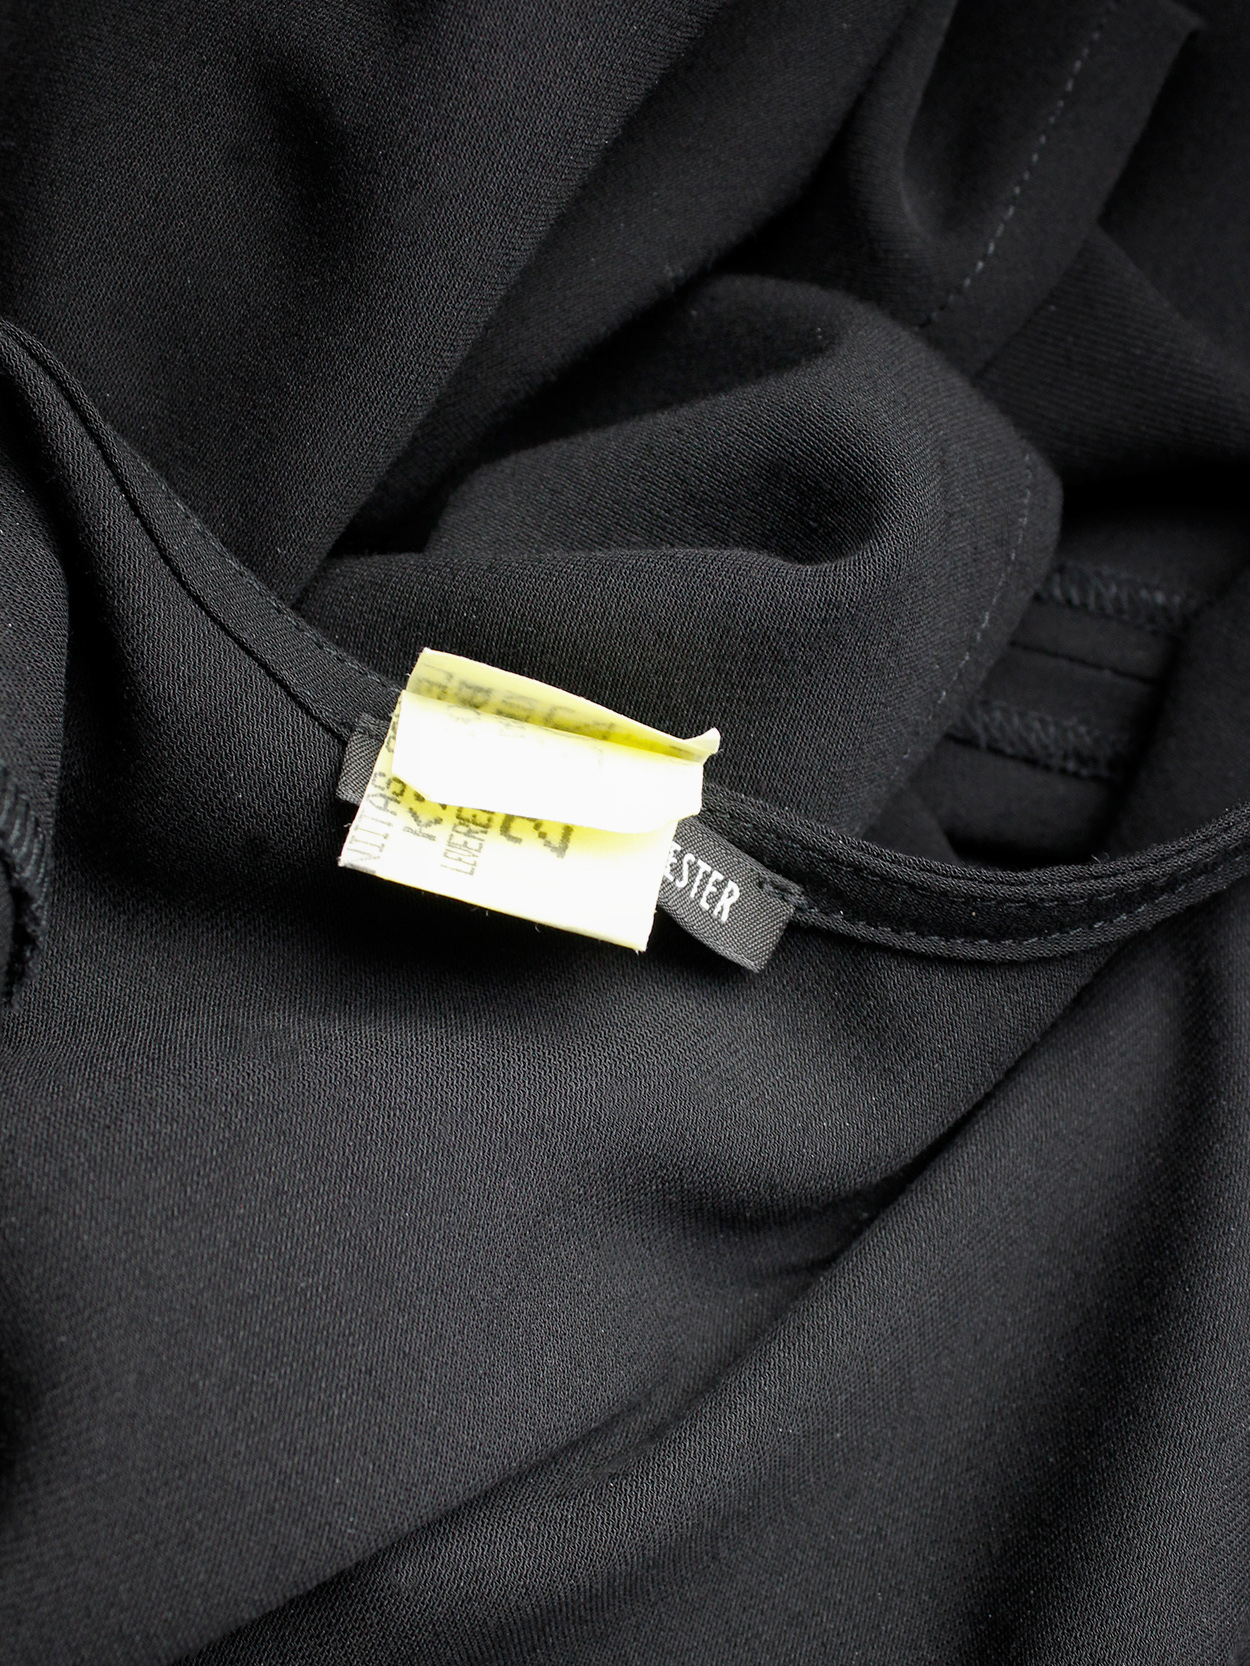 Ann Demeulemeester black asymmetric maxi dress with snap button sash ...